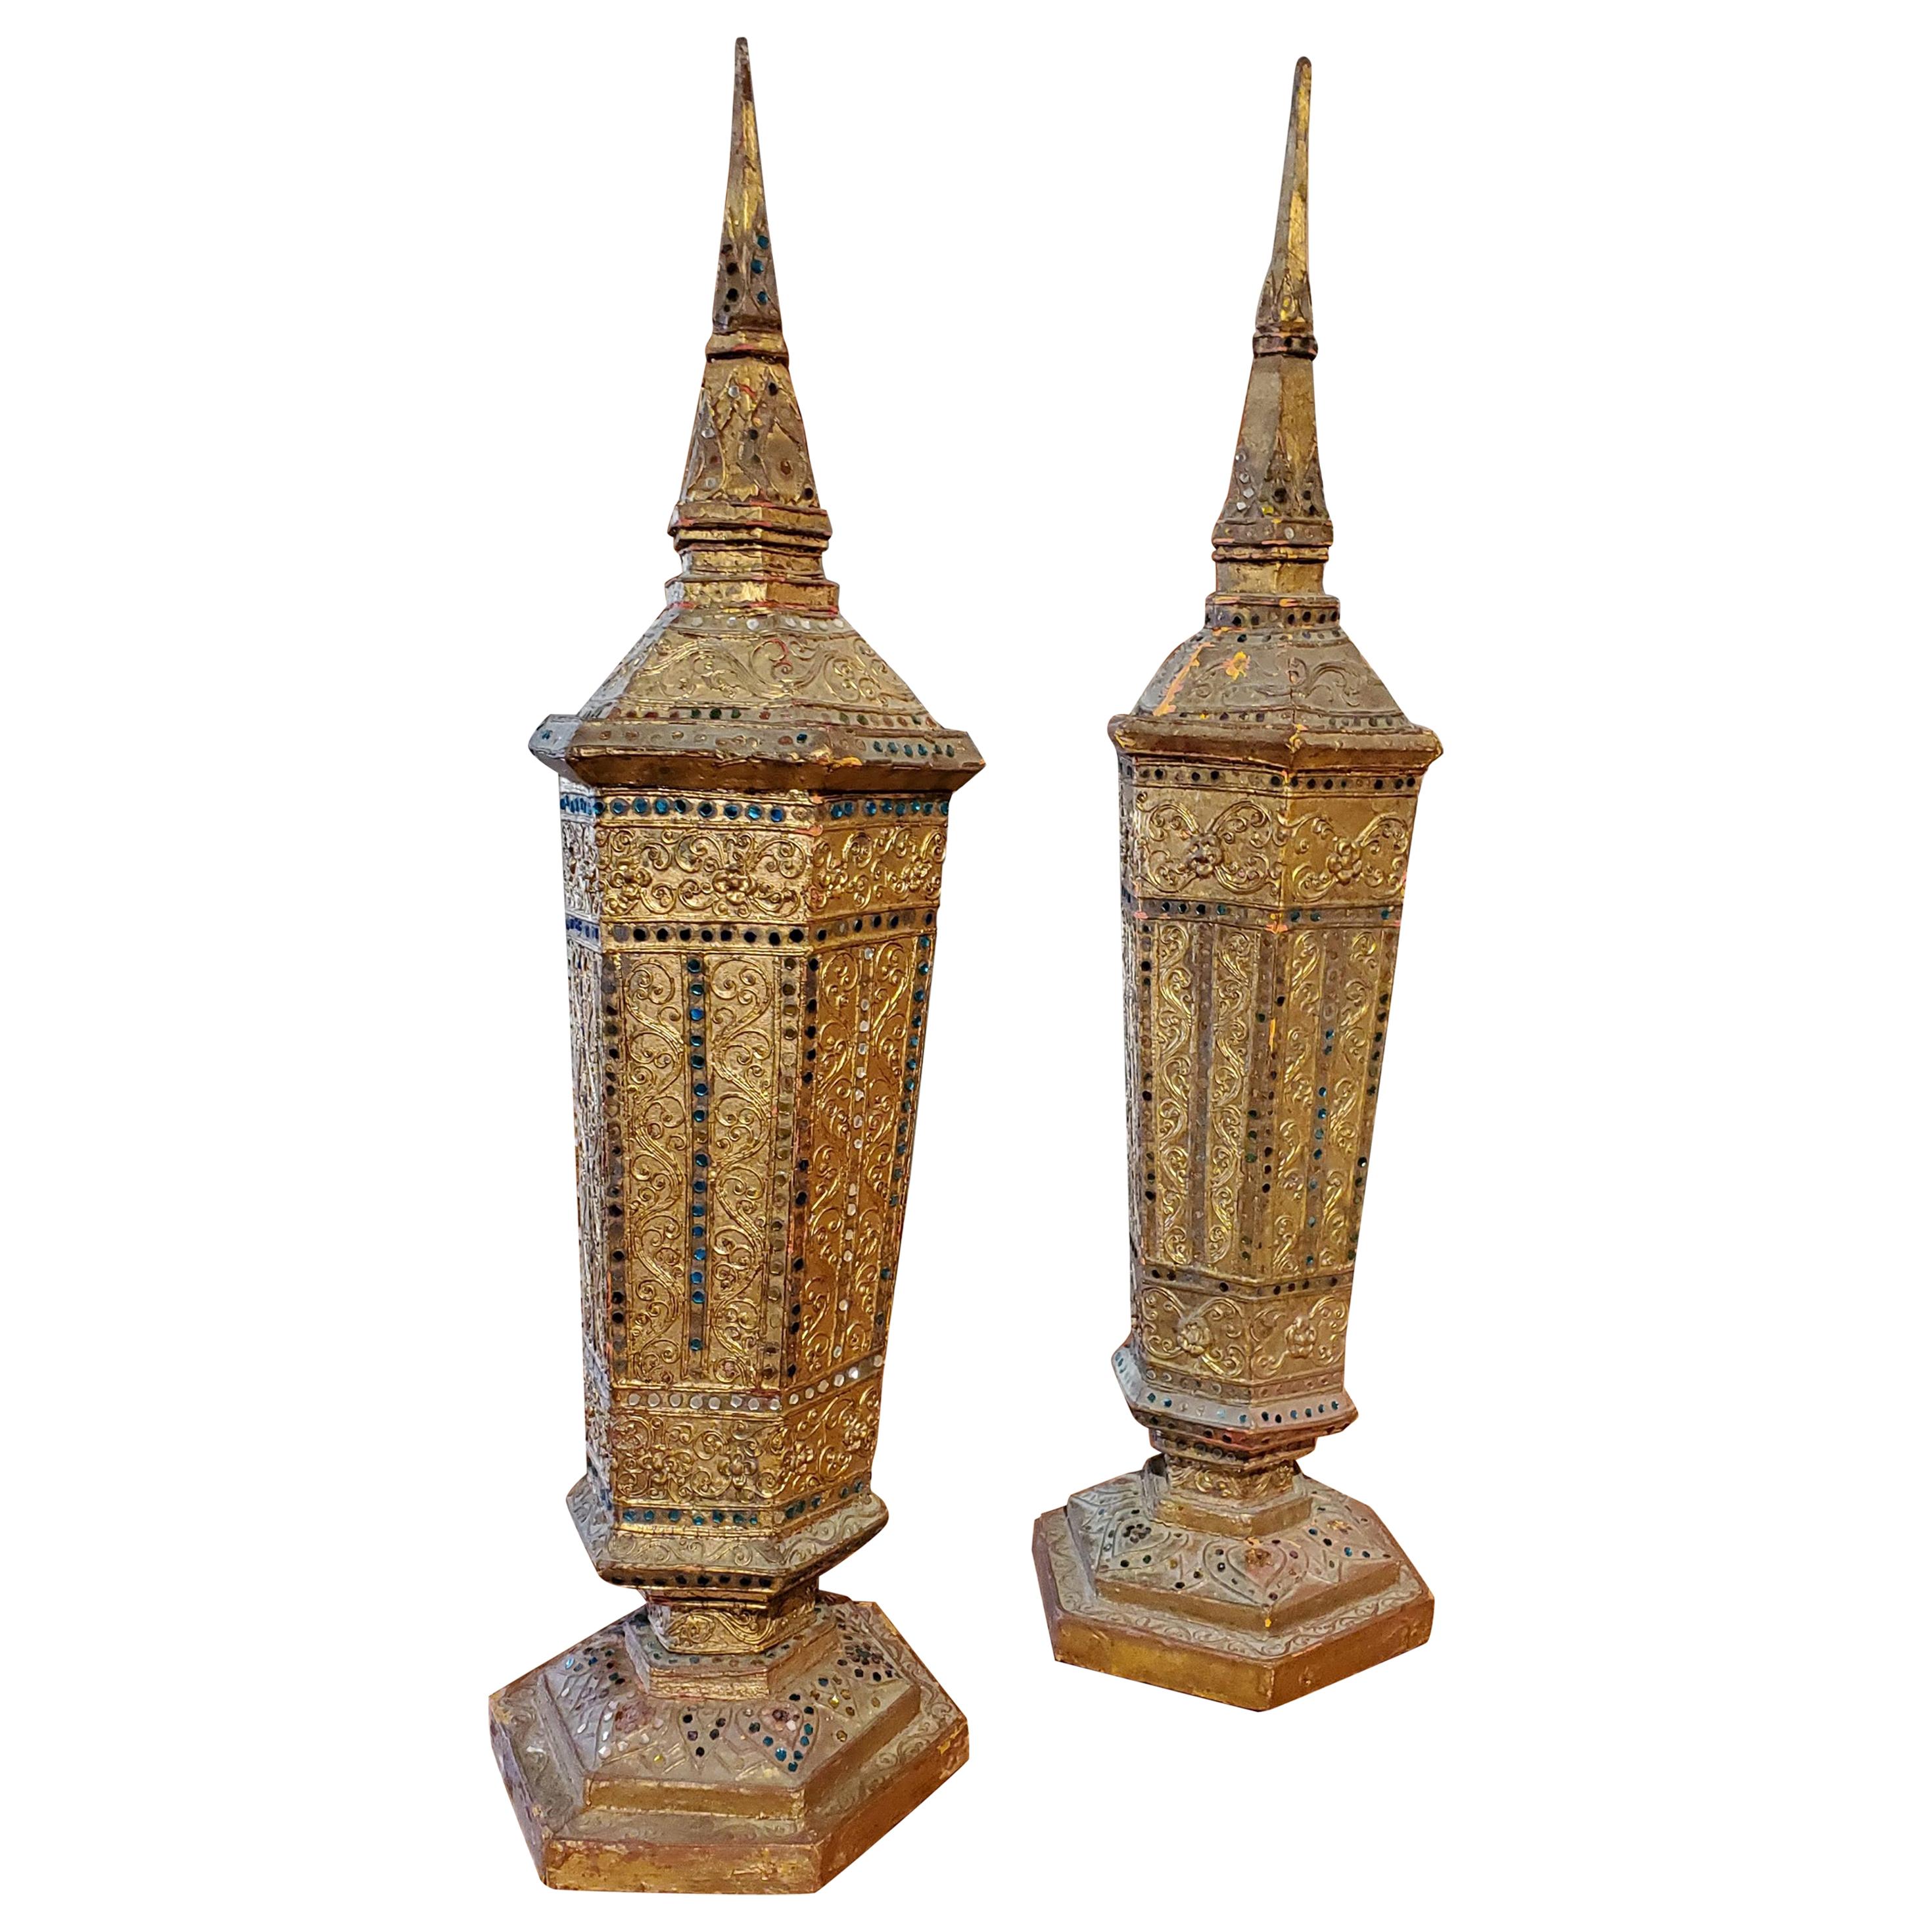 Pair of Late 19th Century Gold Gilt Hexagonal Decorative Thai Urns